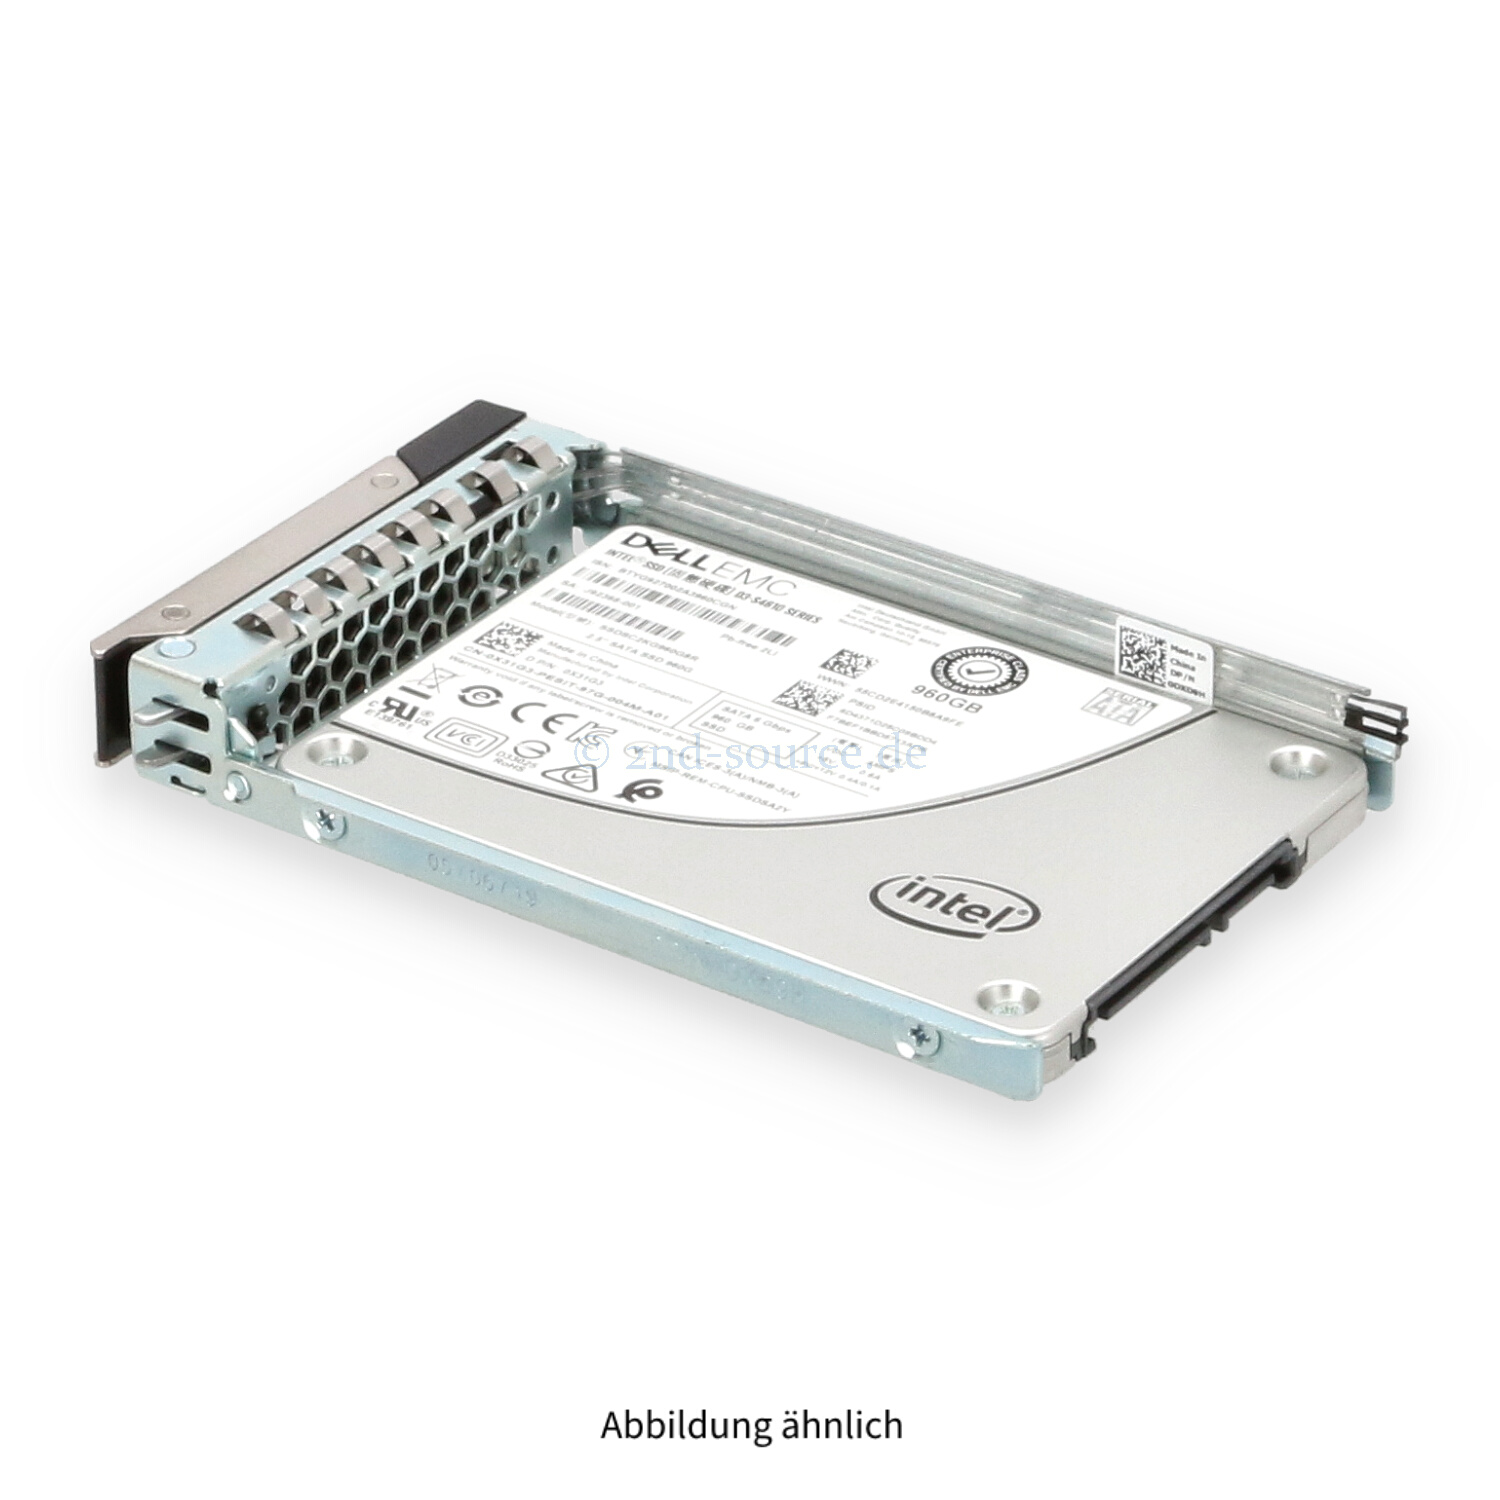 Dell 960GB SATA 6G SFF Mixed Use HotPlug SSD X31G3 0X31G3